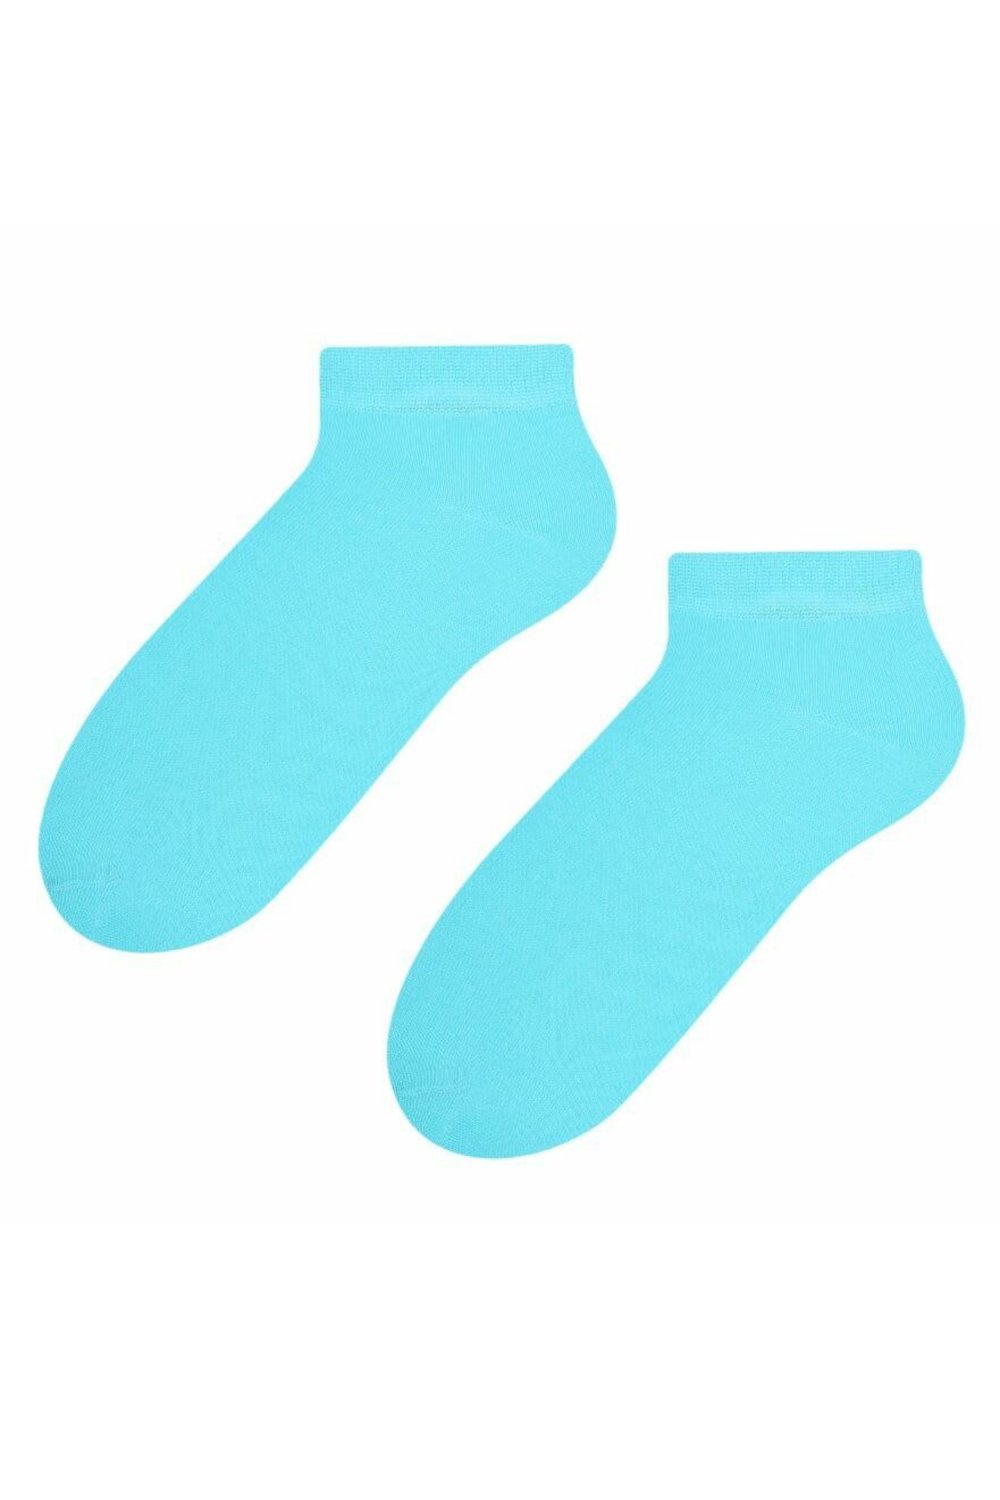 E-shop Dámske ponožky 052 turquoise